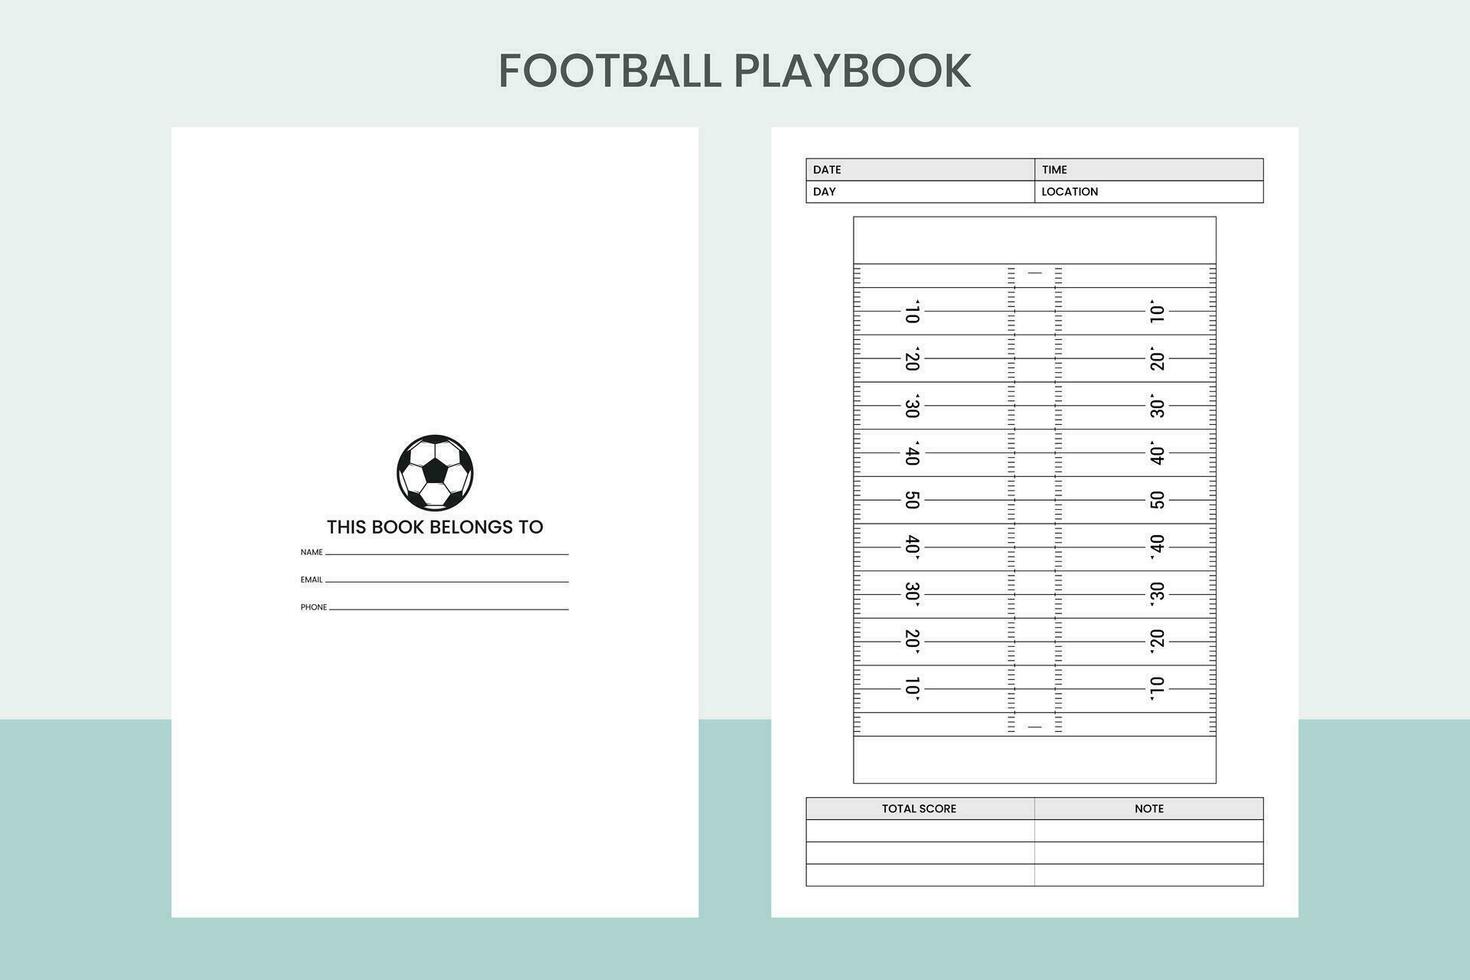 Football playbook pro modèle vecteur